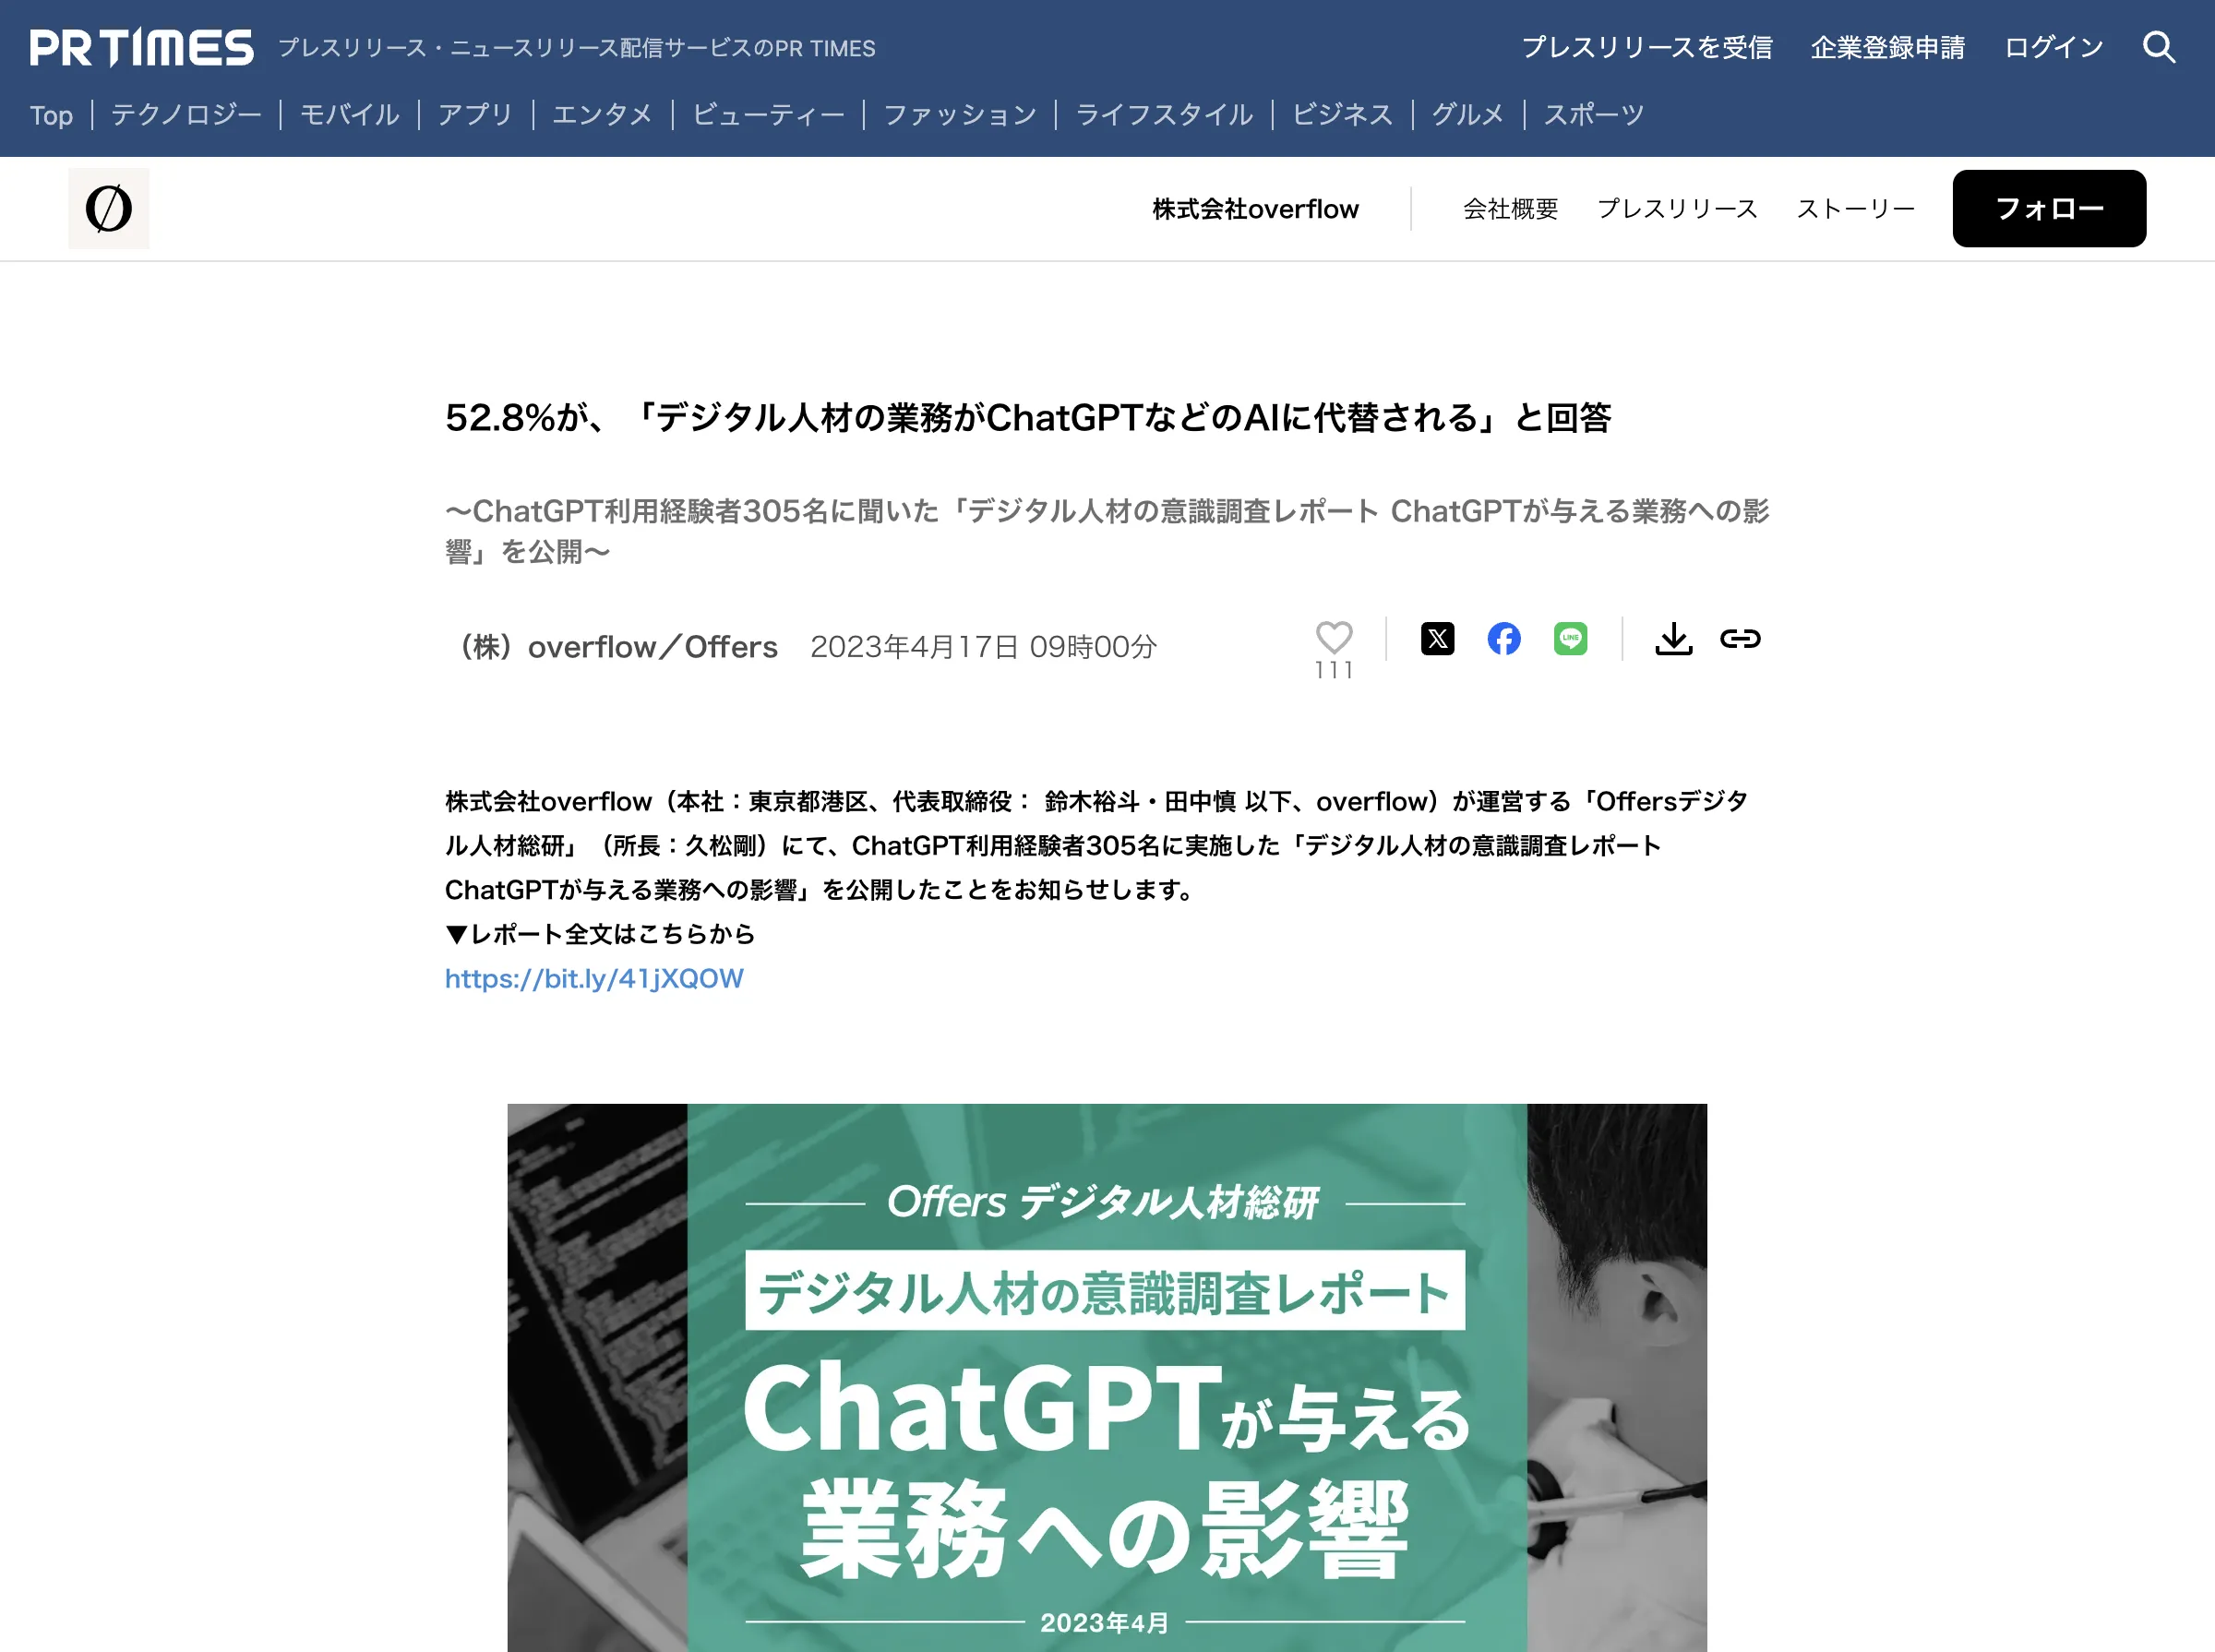 ChatGPTが変えるデジタル人材の未来：影響と受け入れ状況に関する意識調査レポート公開の紹介画像